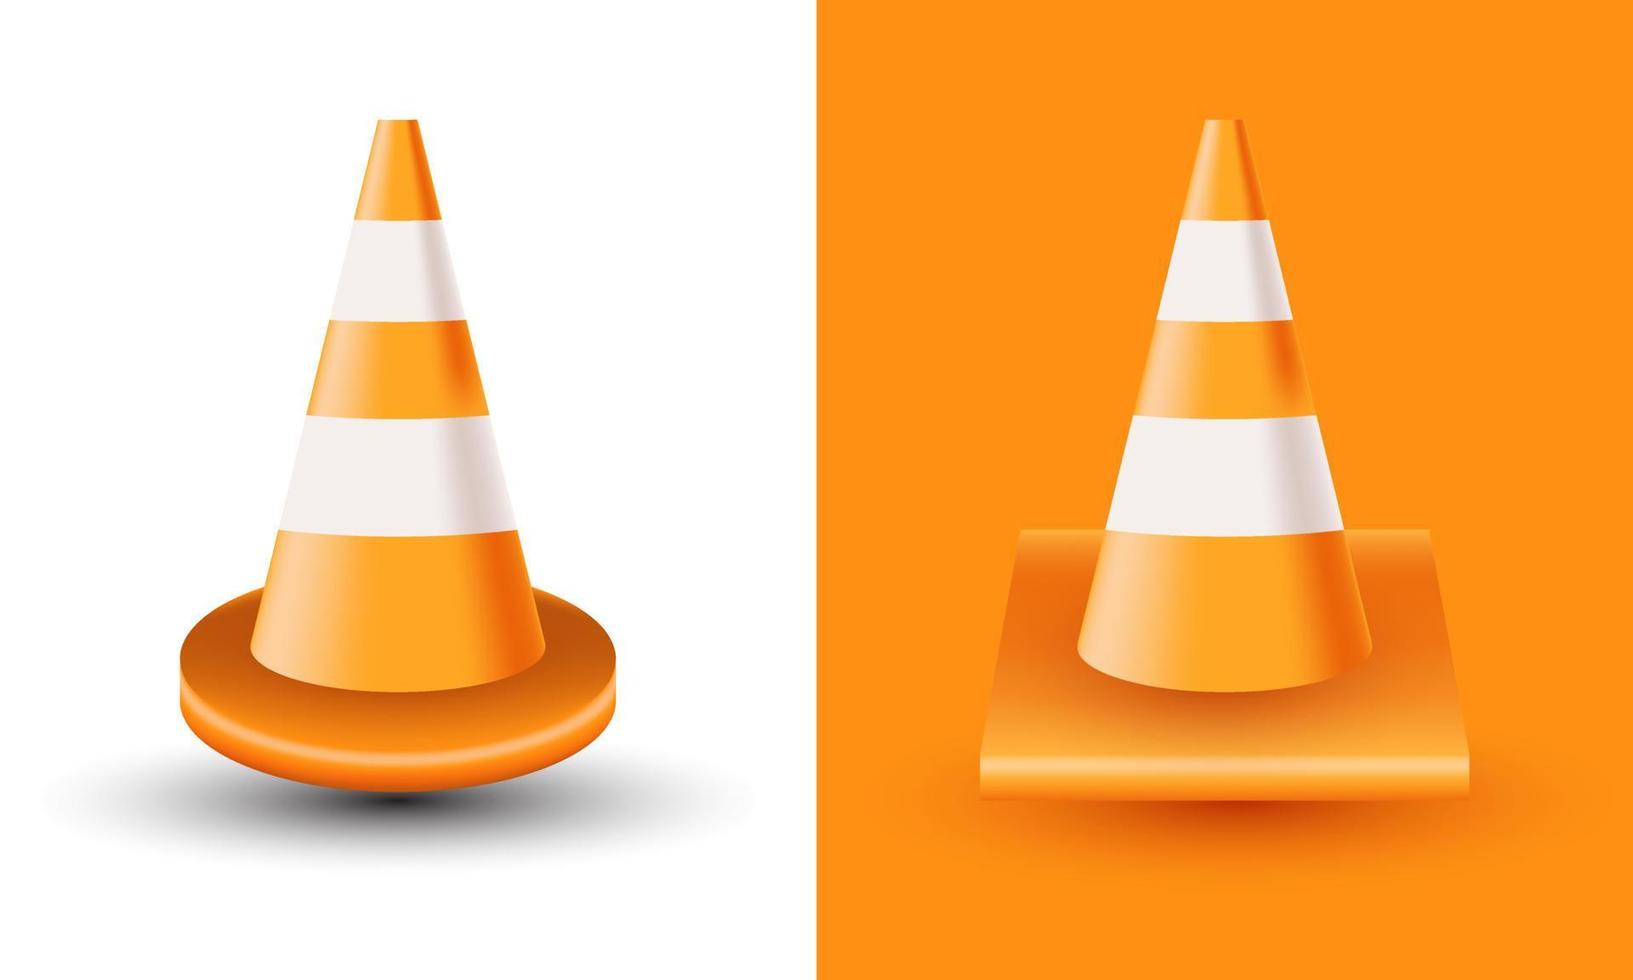 unik 3d-ikon två trafik kon på orange isolerad på vektor